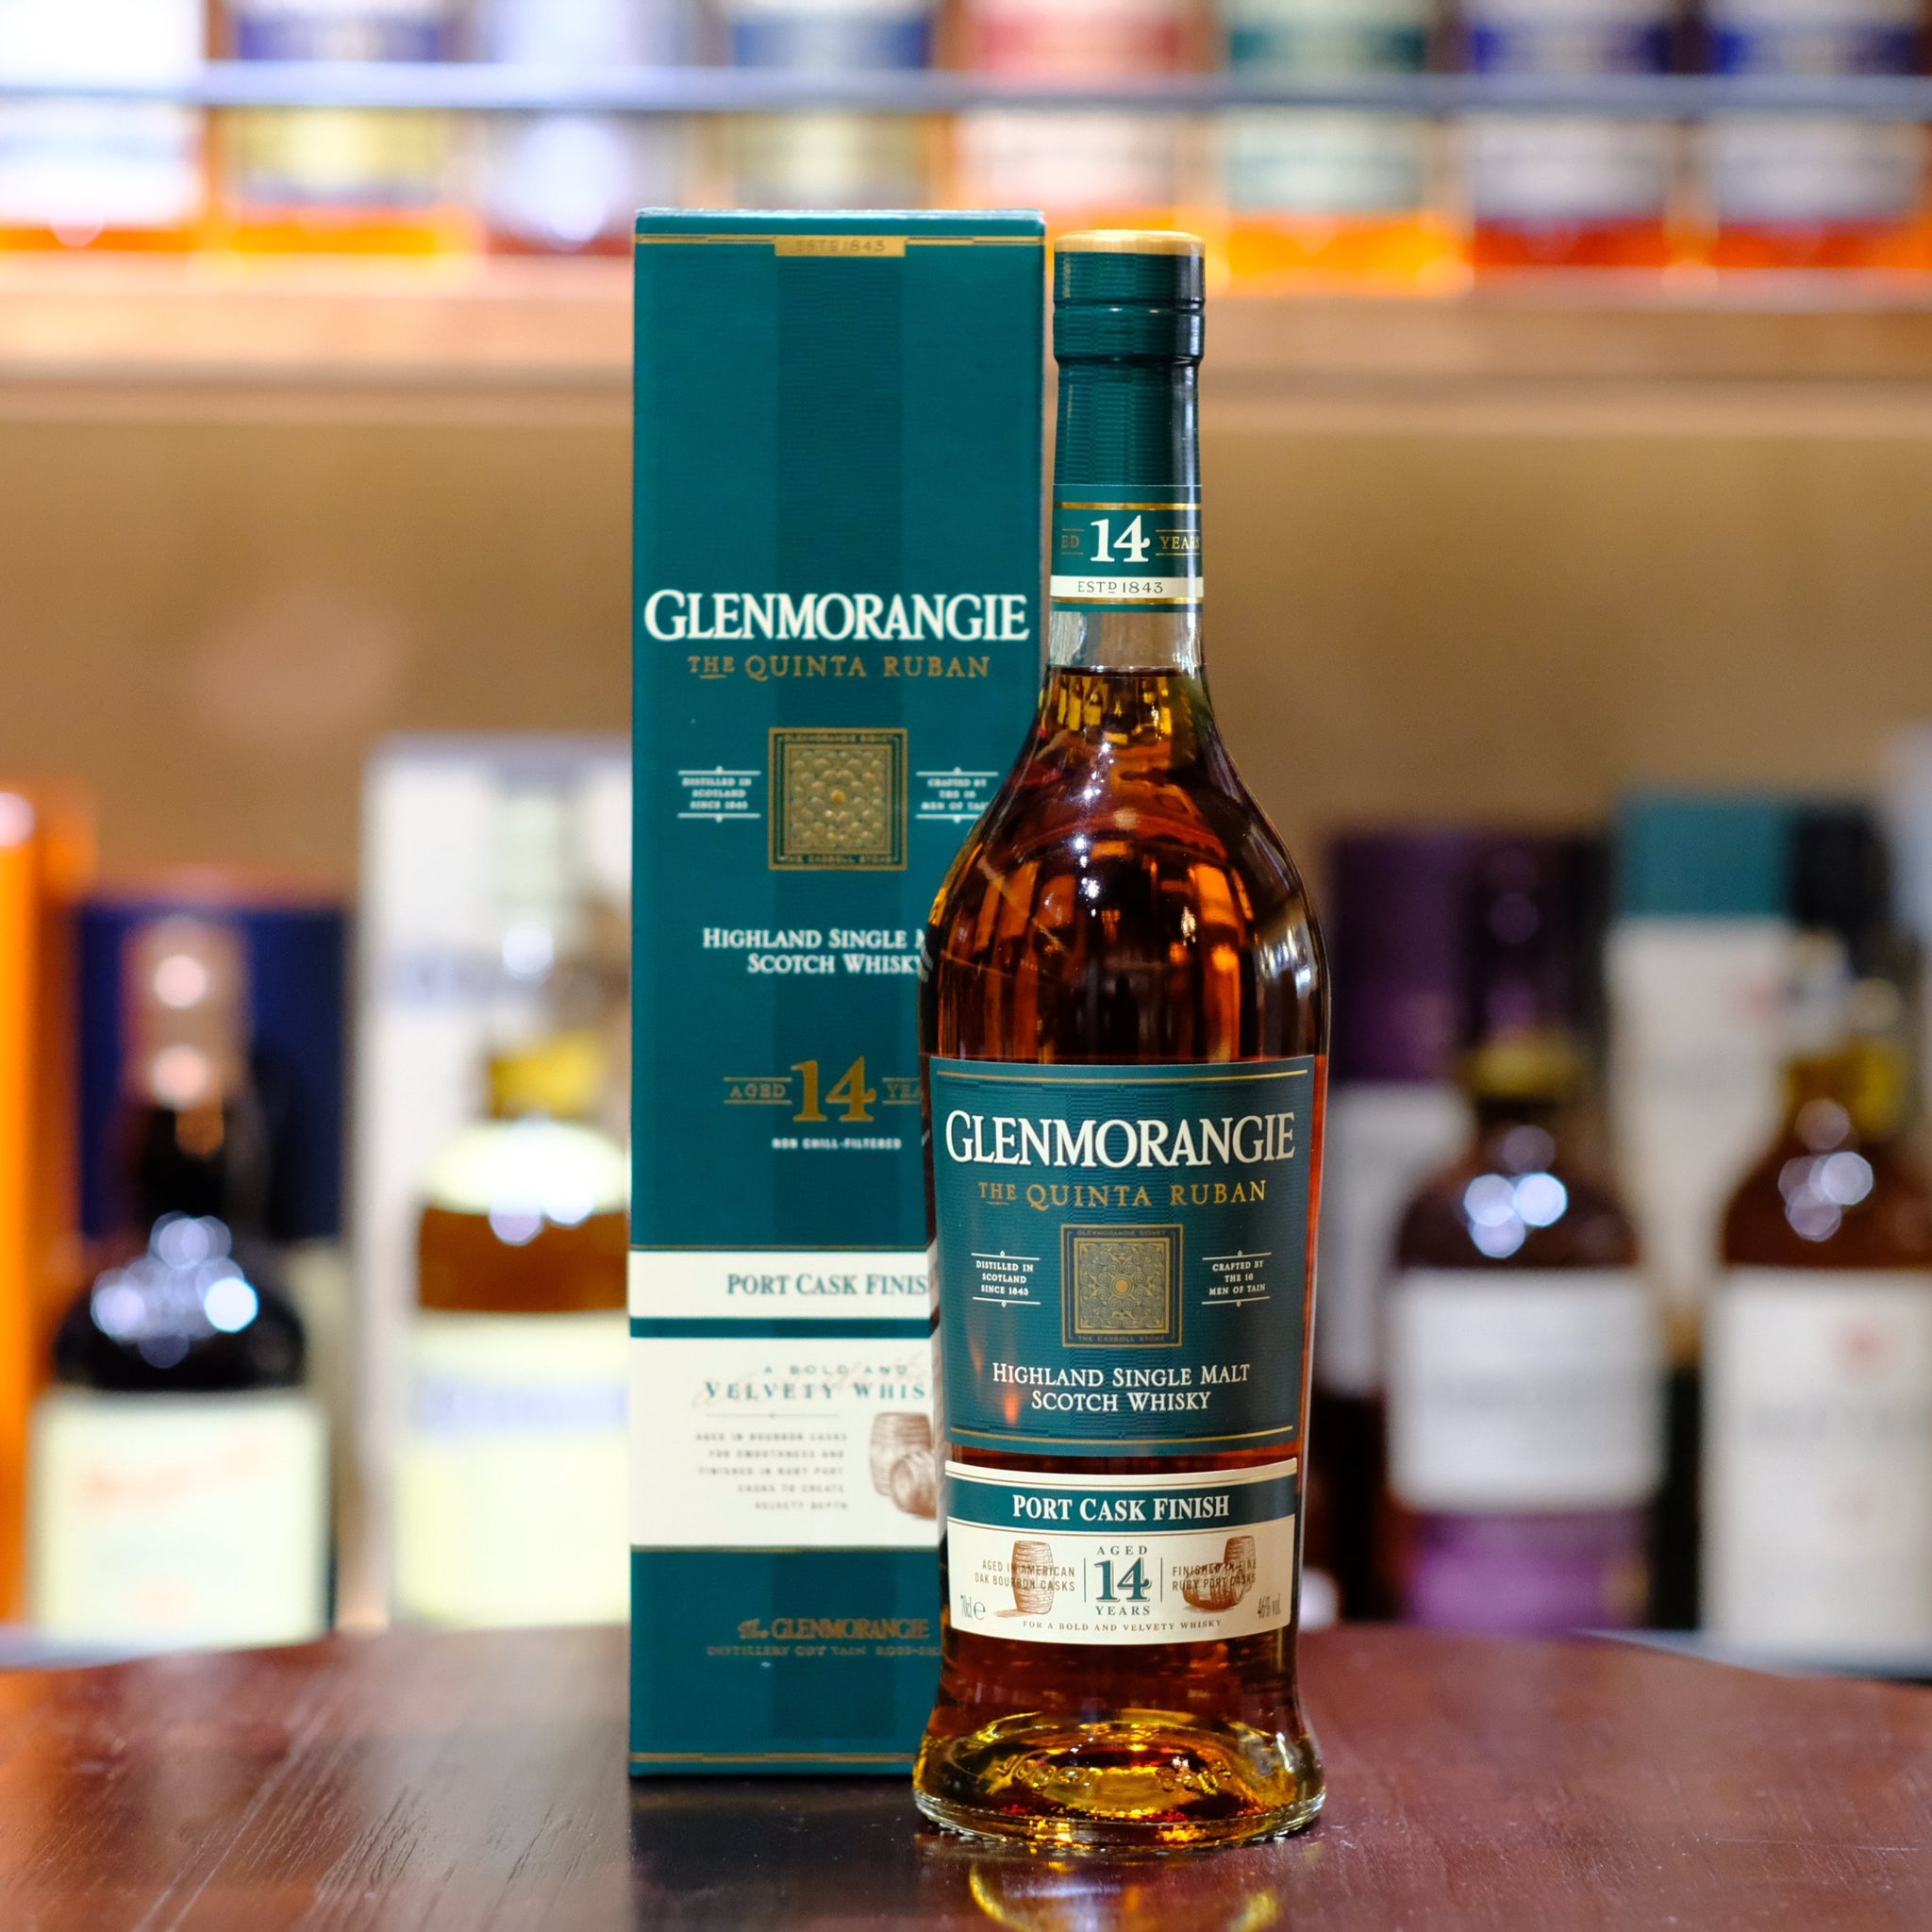 Glenmorangie 14 Year Old "Quinta Ruban" Single Malt Scotch Whisky